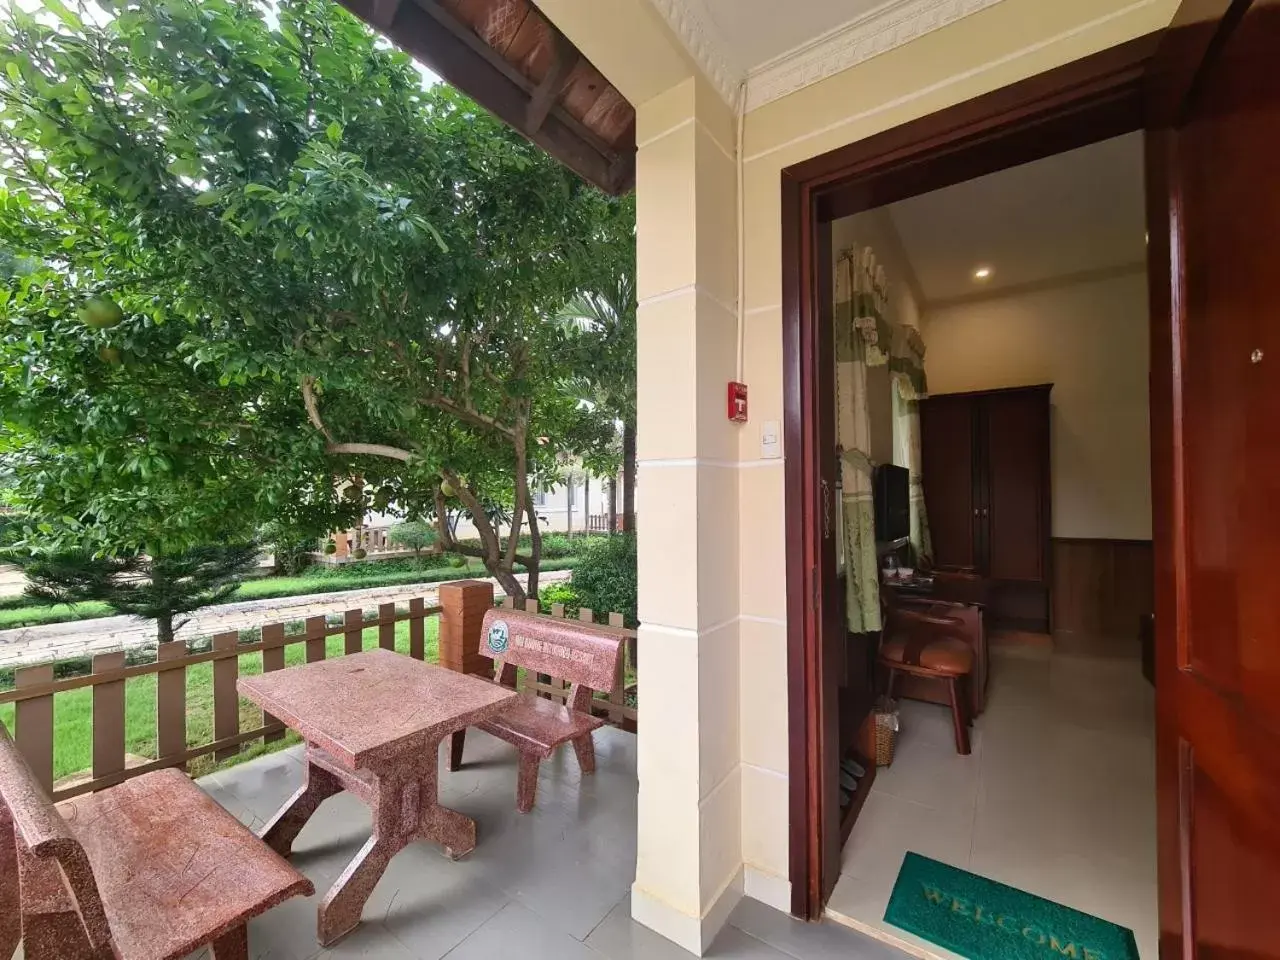 Villa with Garden View in Hai Duong Intourco Resort